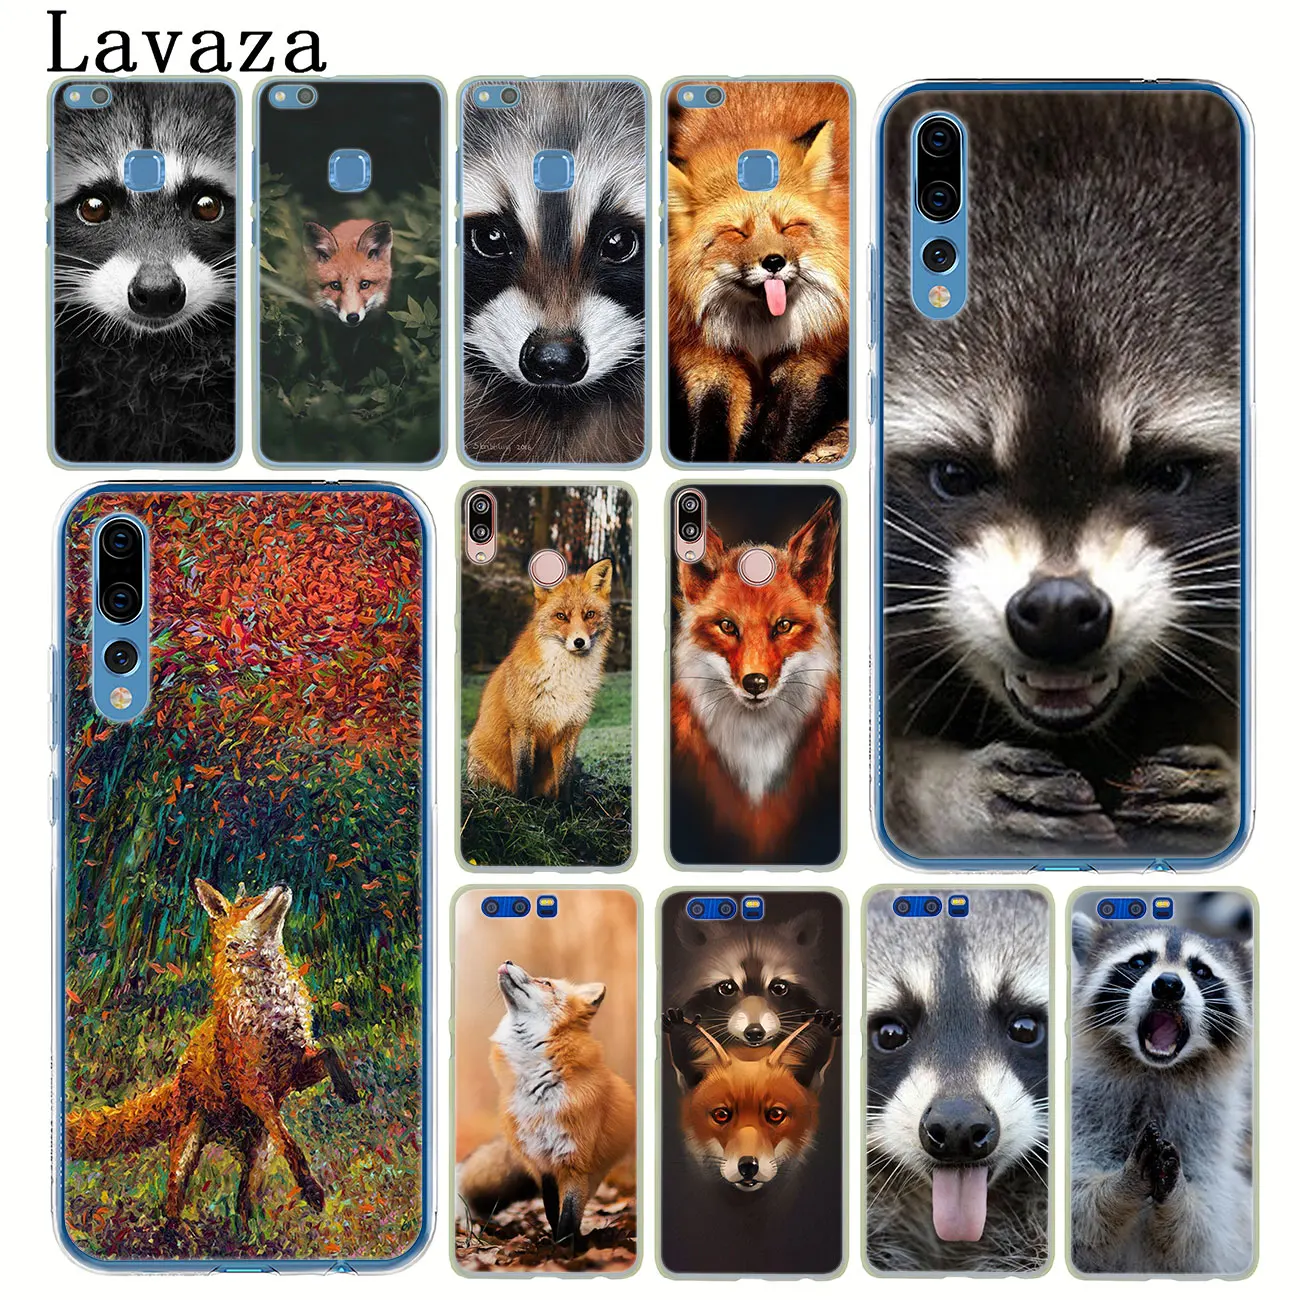 

Lavaza Animal Raccoon Fox Phone Case for Huawei P30 P20 Pro P9 P10 Plus P8 Lite Mini 2016 2017 P smart Z 2019 Cover